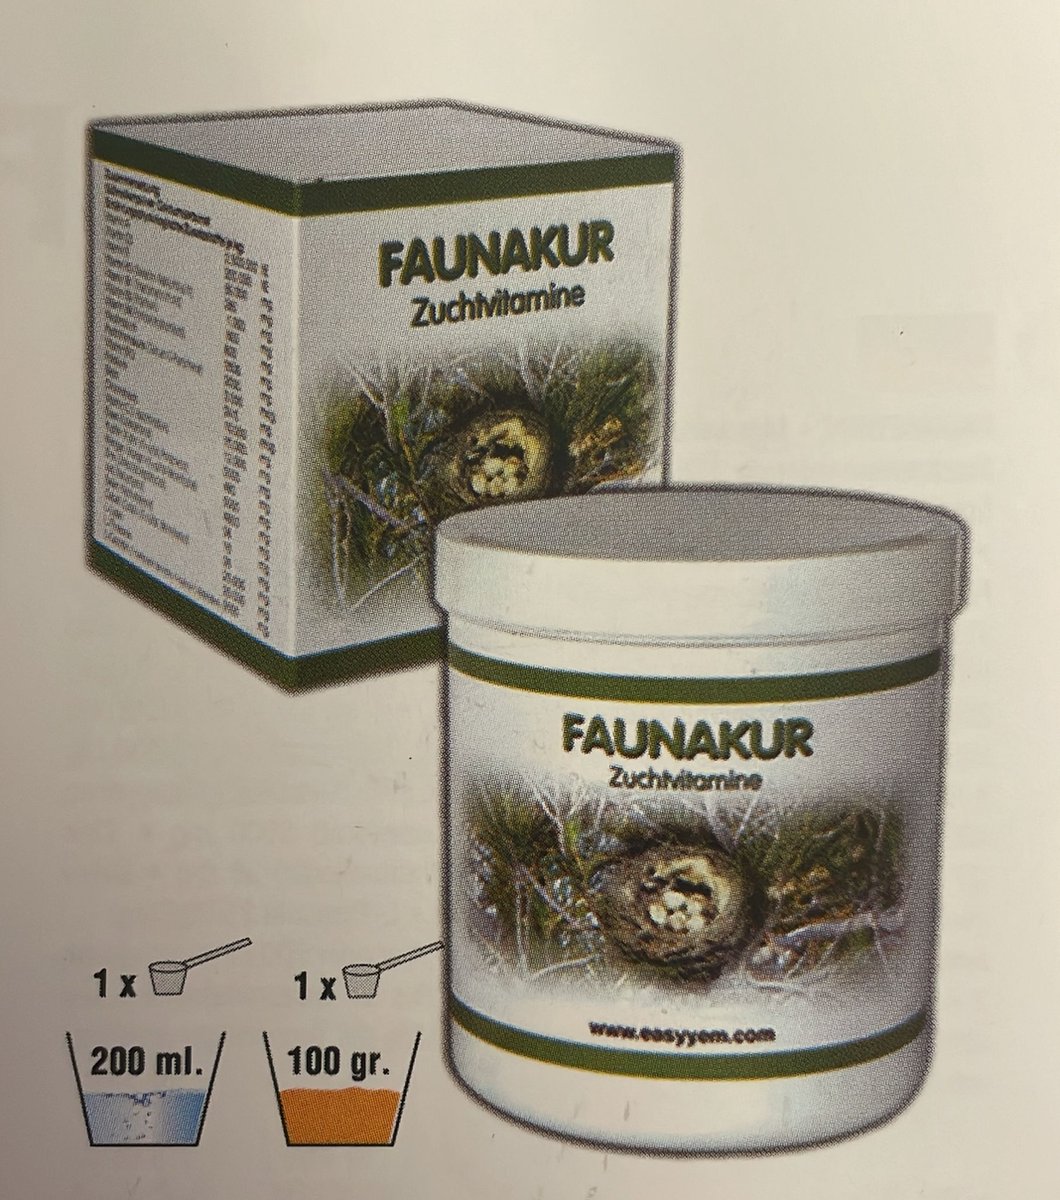 Easyyem Faunakur-500 gram